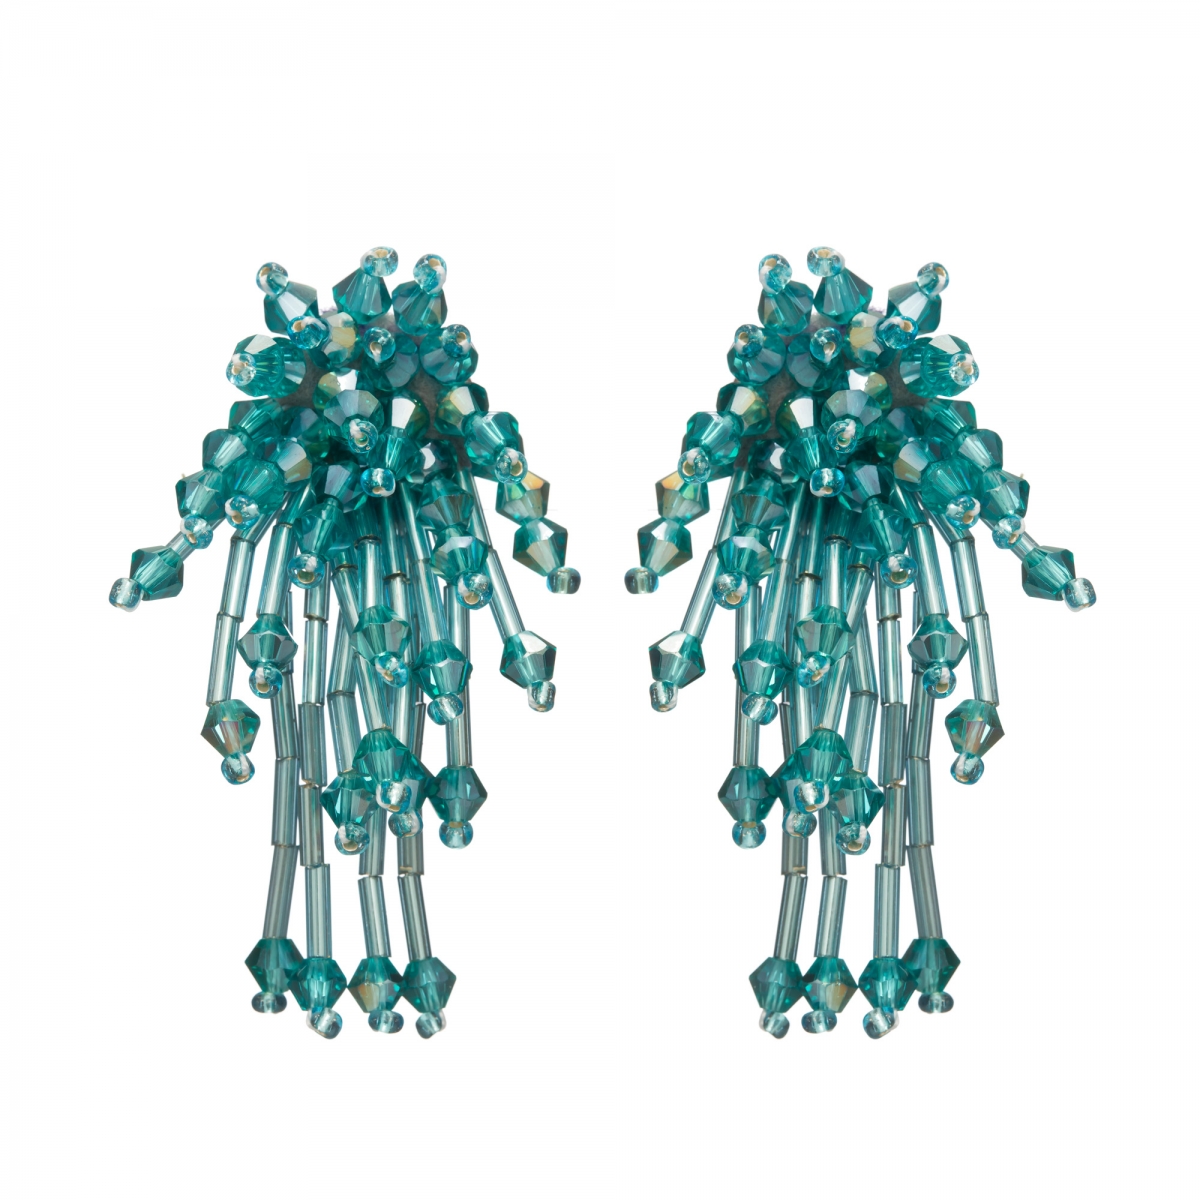 Náušnice Star Turquoise Metal Crystal Beads